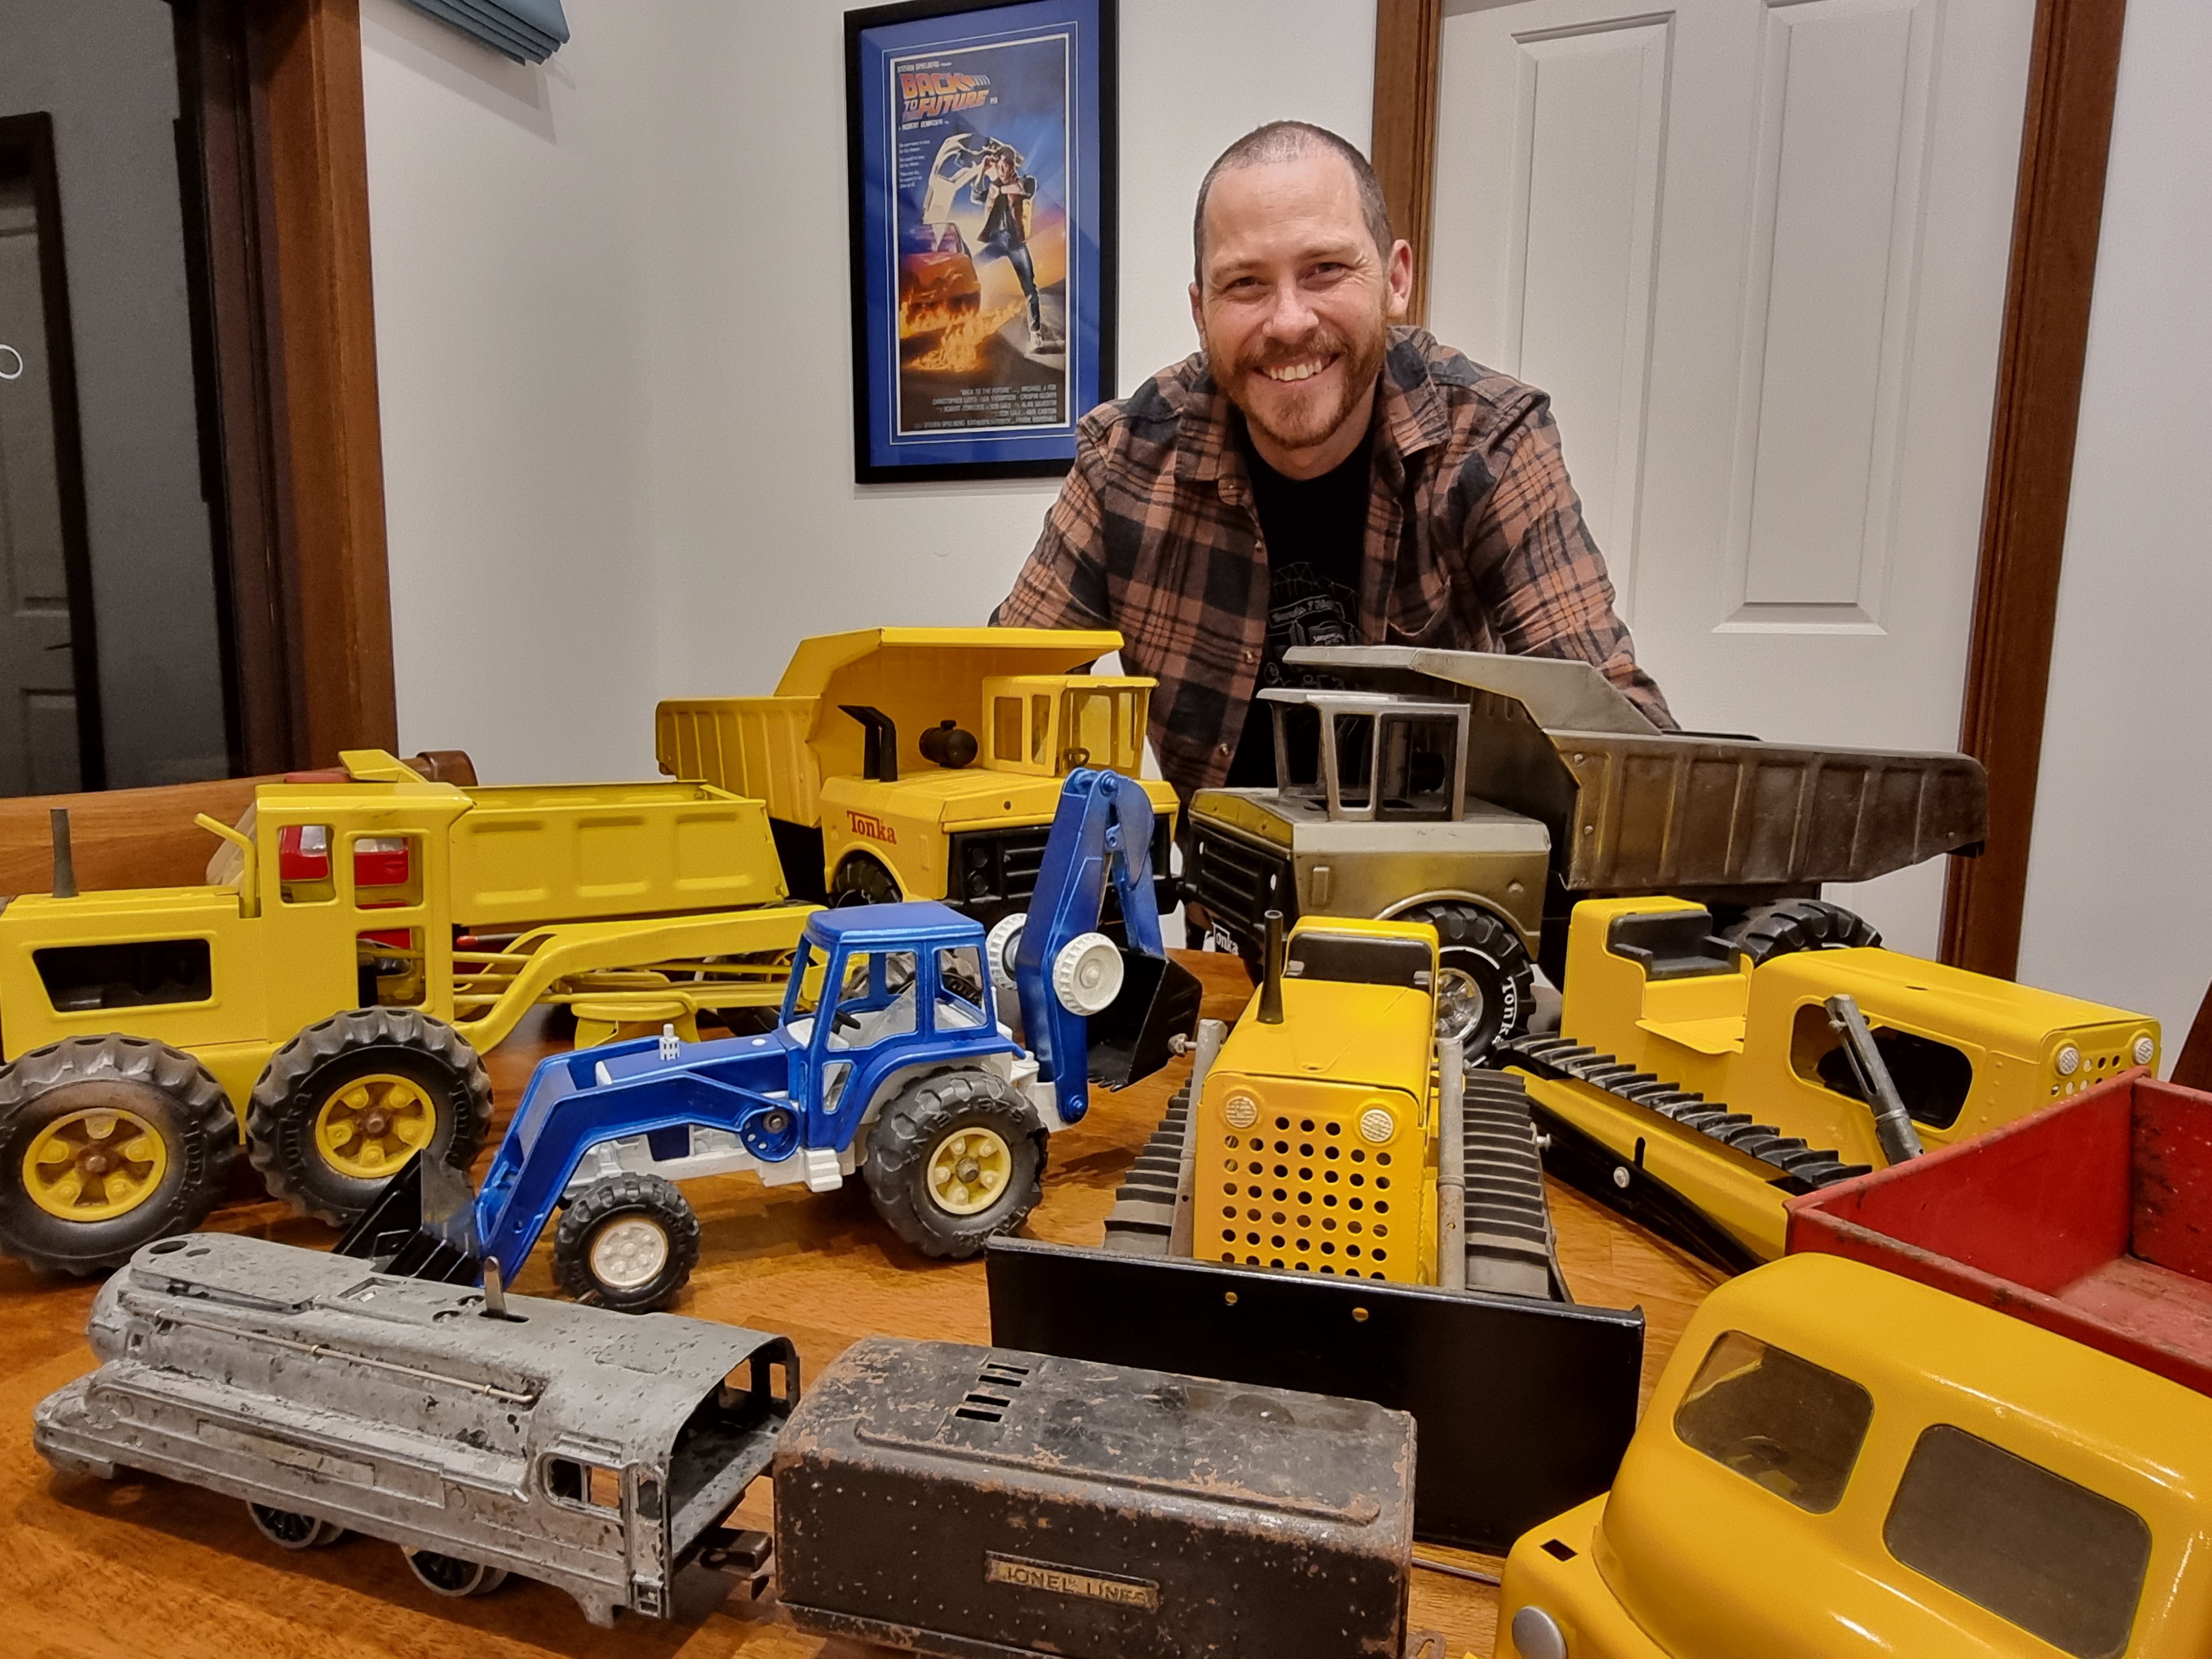 Post apocalyptic cars, Tonka trucks and Flintstones TVs - meet Wagga's most eclectic collector